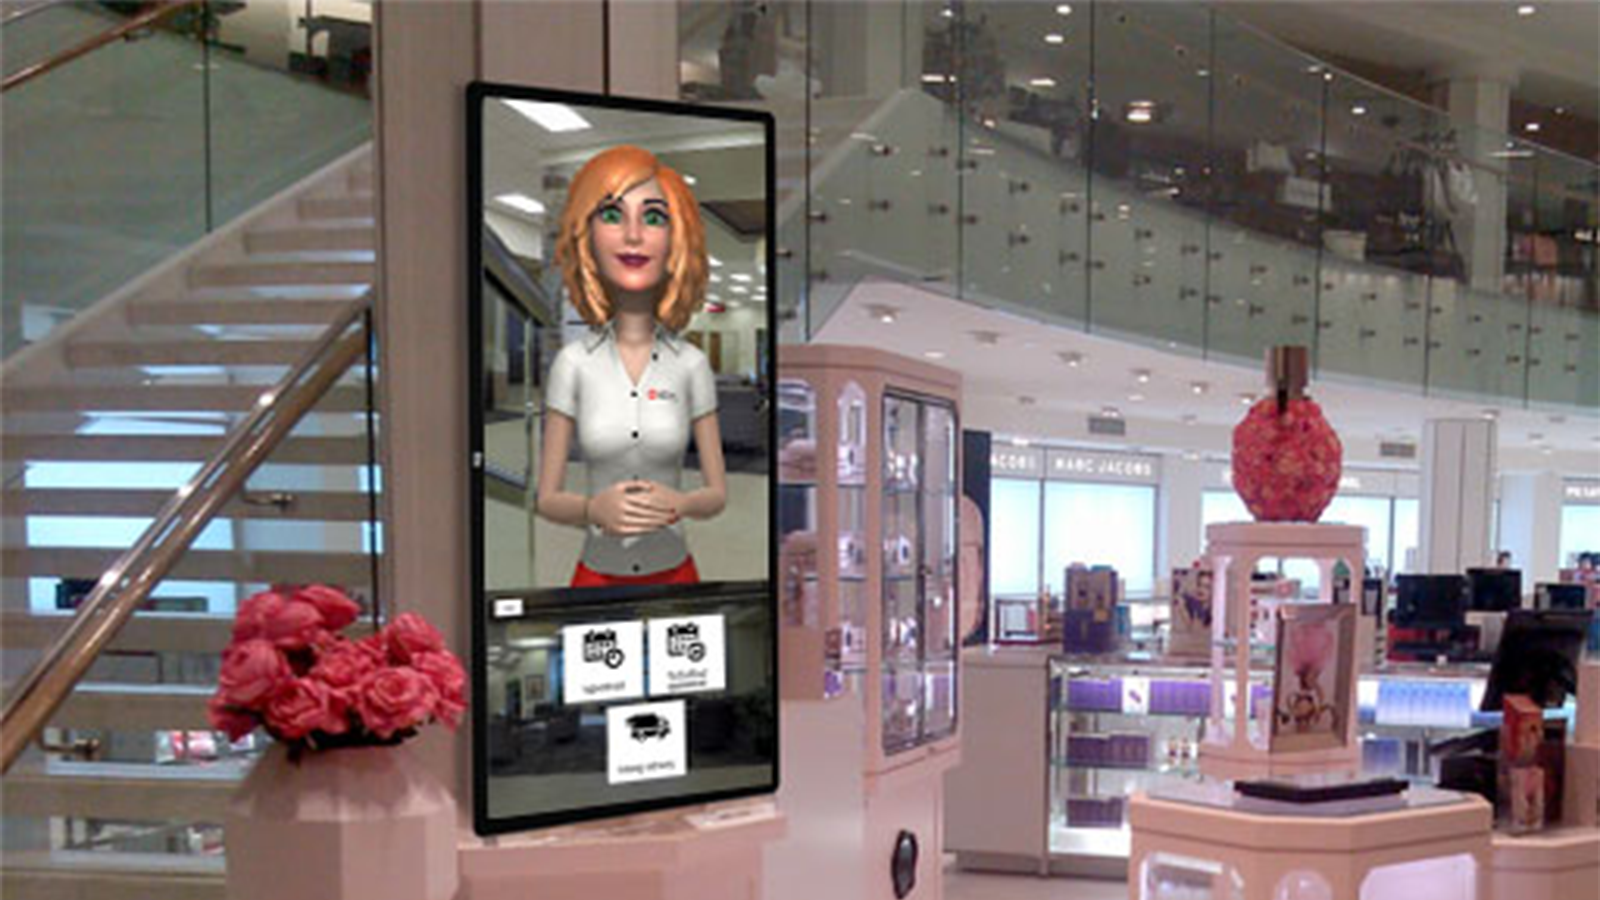 prsonas hologram on a kiosk screen in a macy's store